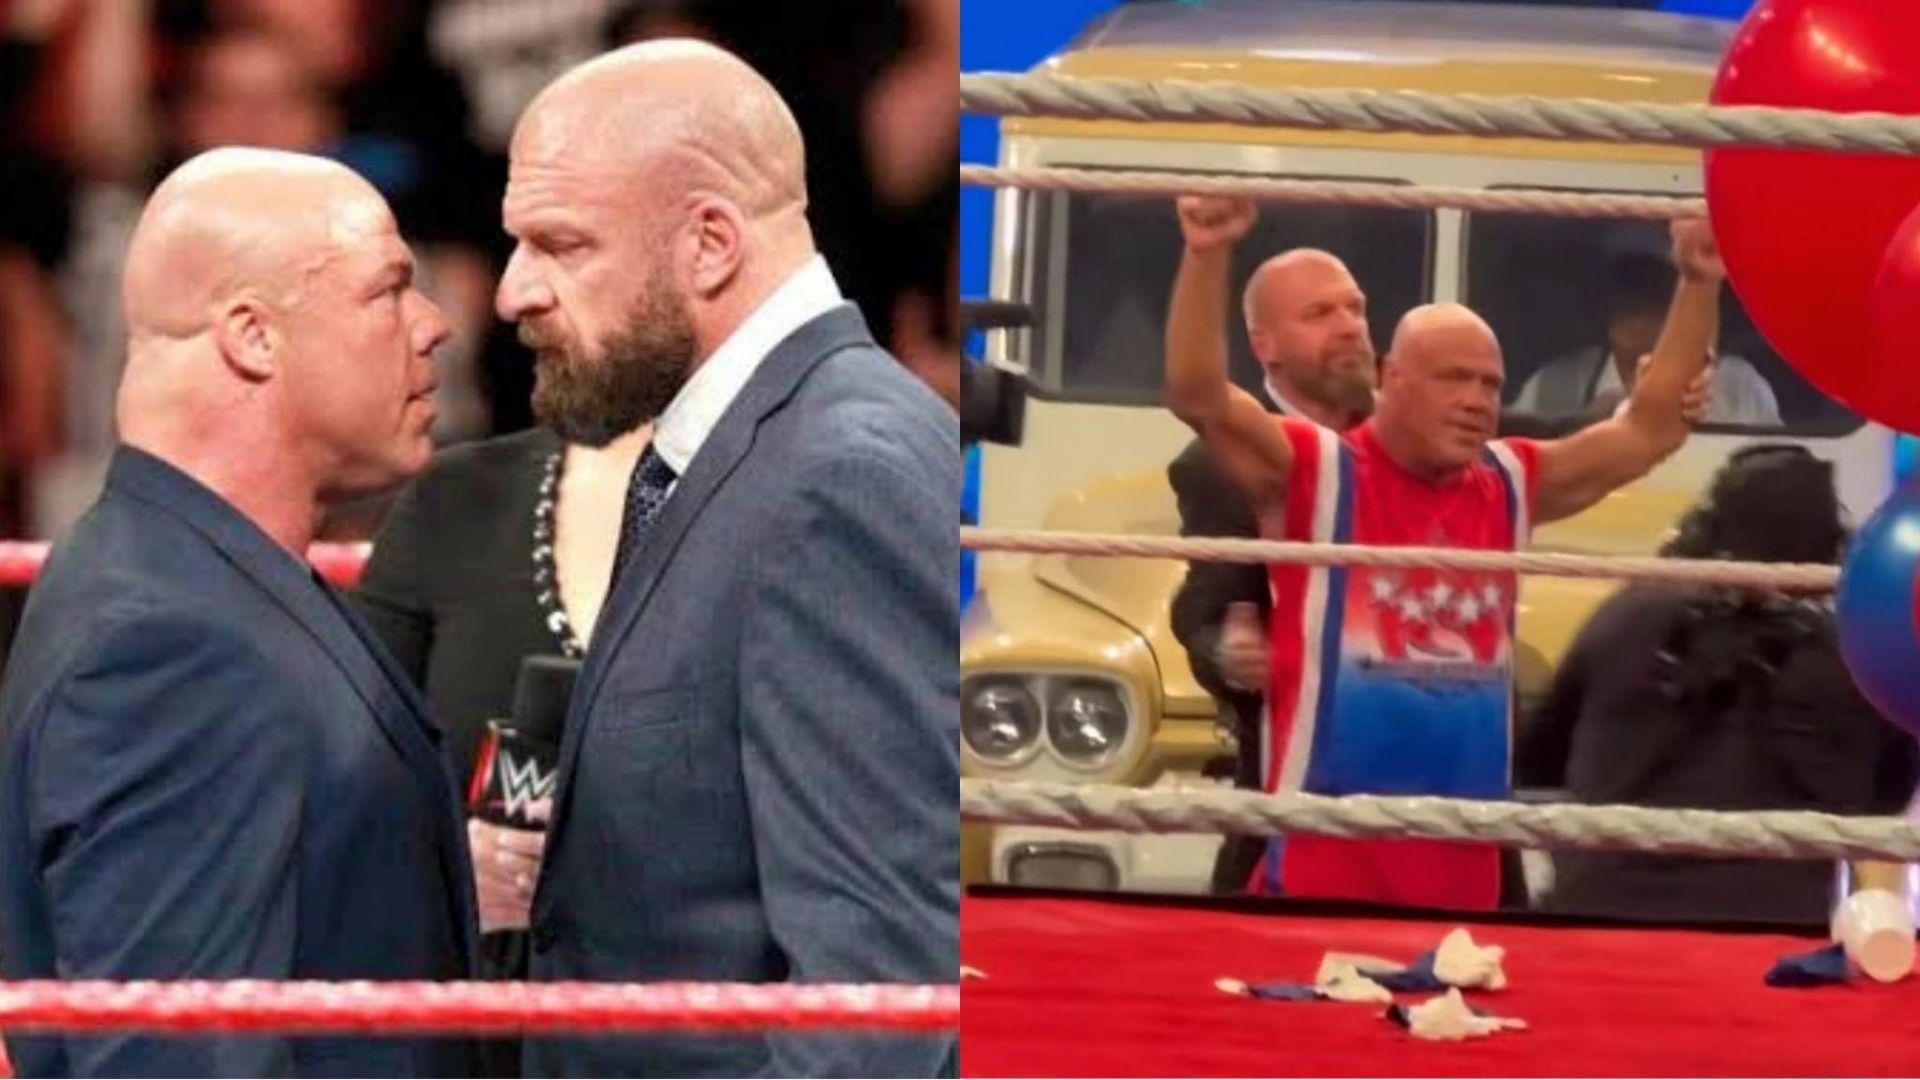 Triple H and Kurt Angle shared an emotional moment last night